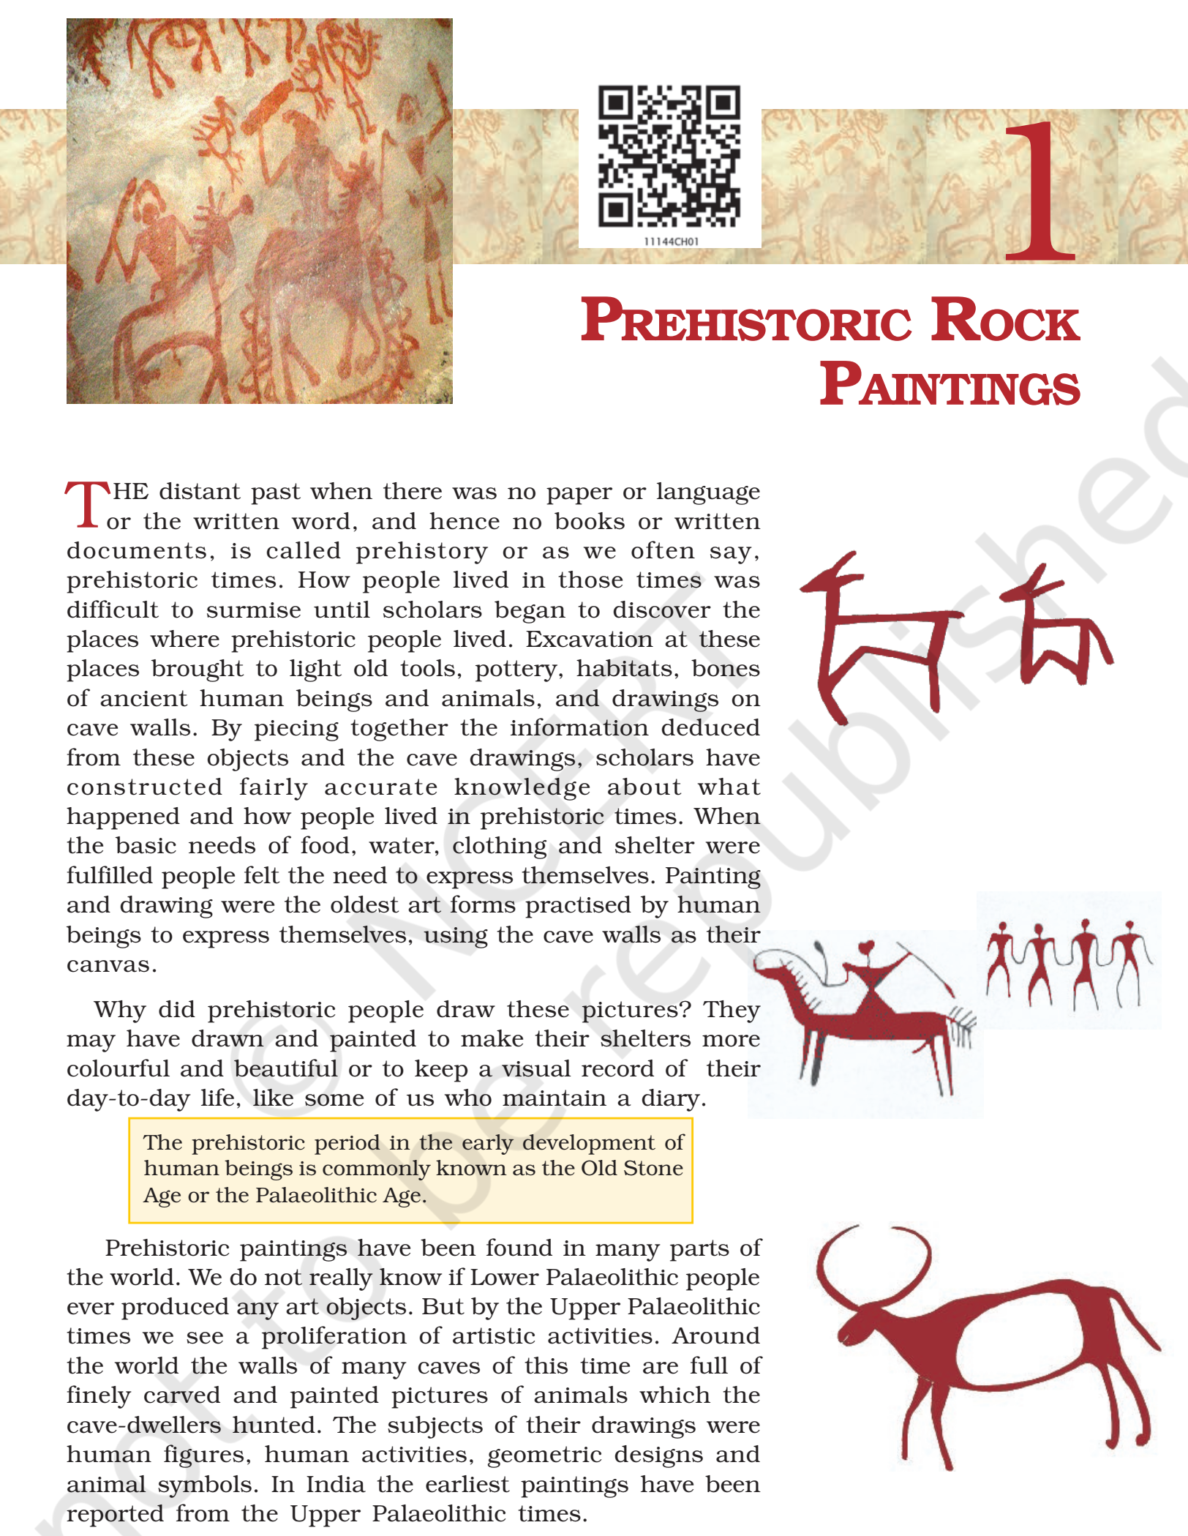 write an essay on pre historic rock art